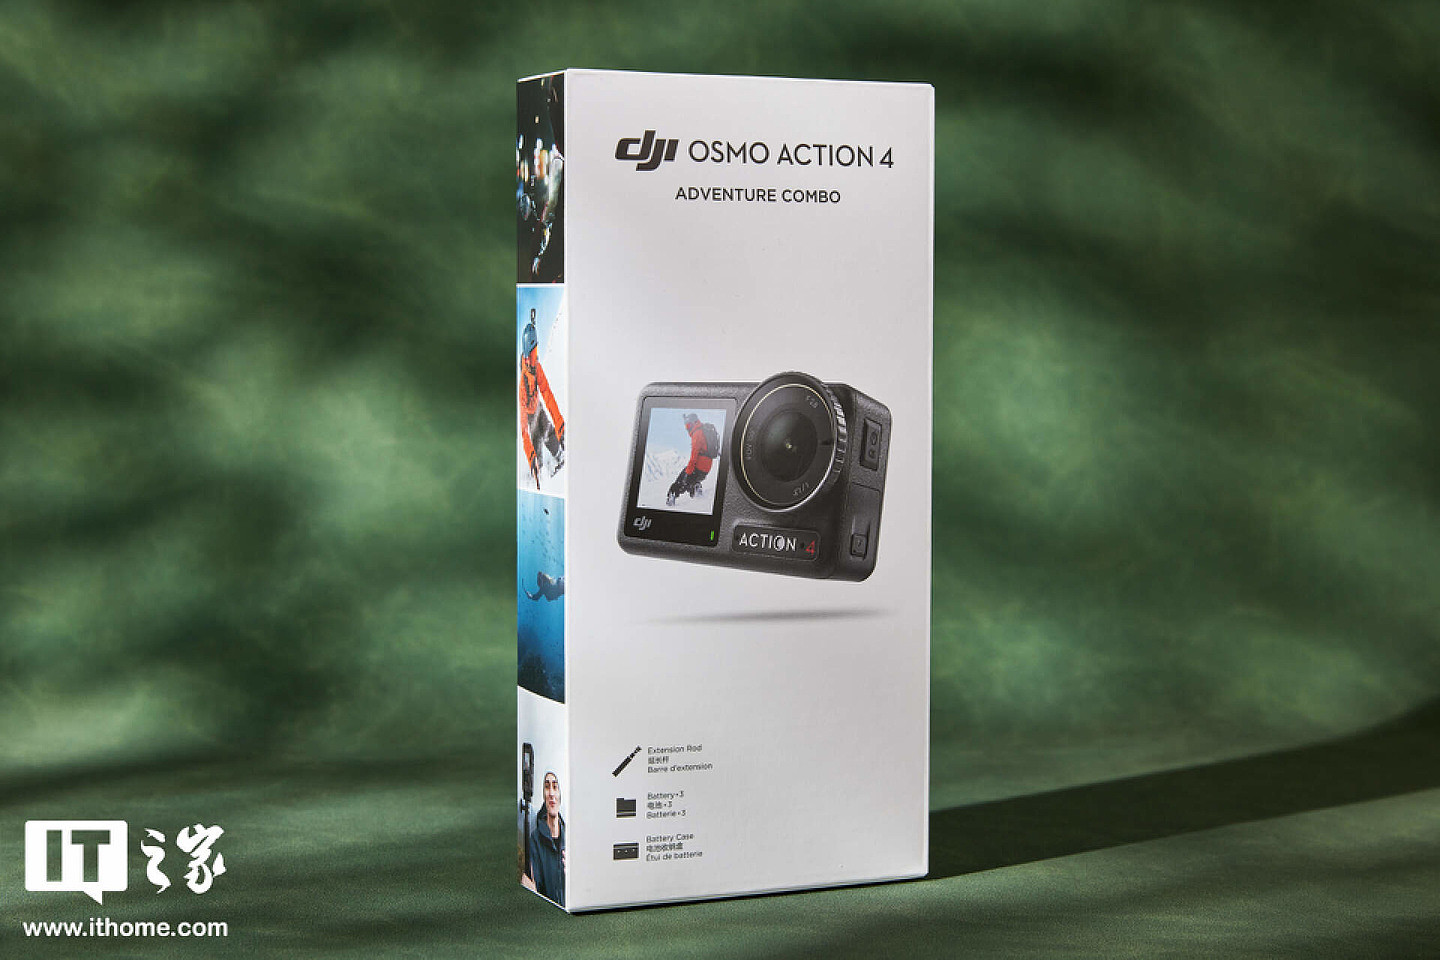 【IT之家评测室】大疆 DJI OSMO ACTION 4 运动相机体验：交互依旧优秀，画质更进一步 - 1